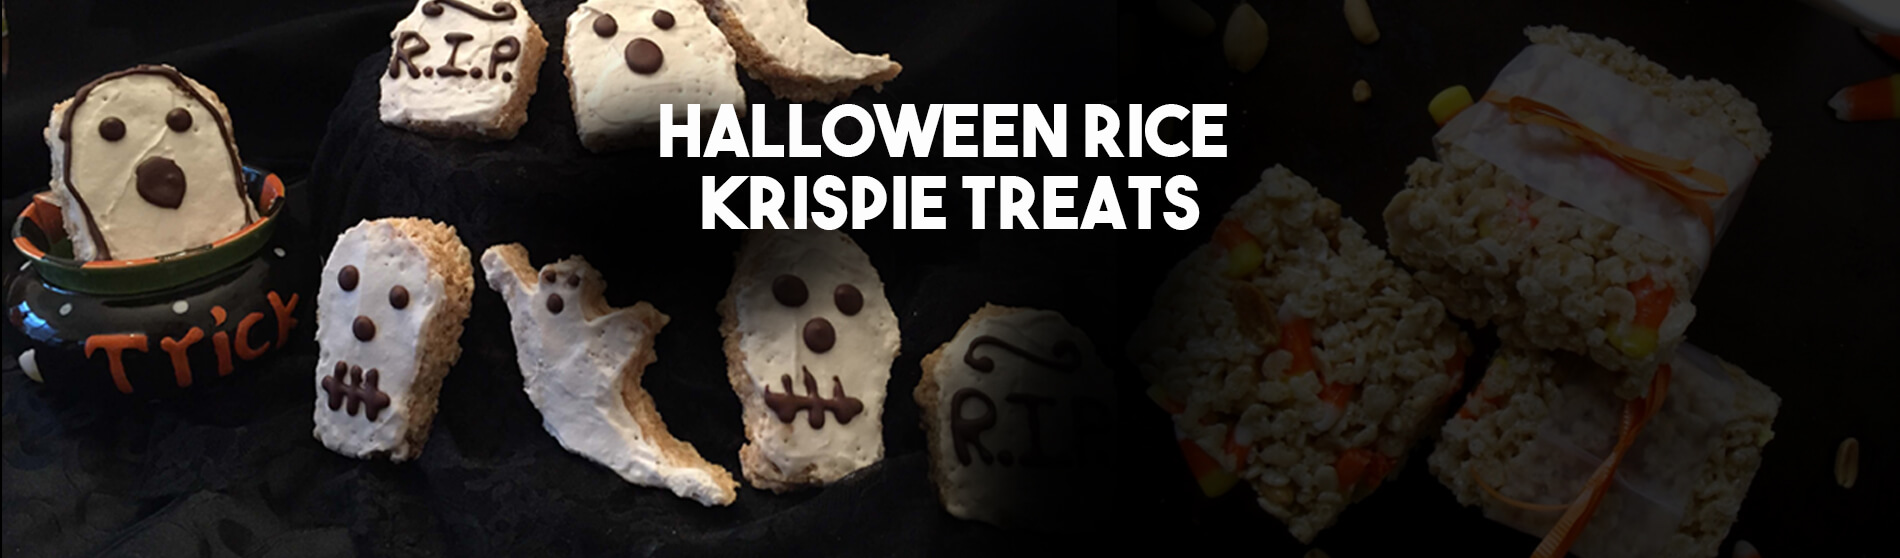 Glendale Halloween : Halloween-rice-krispie-treats